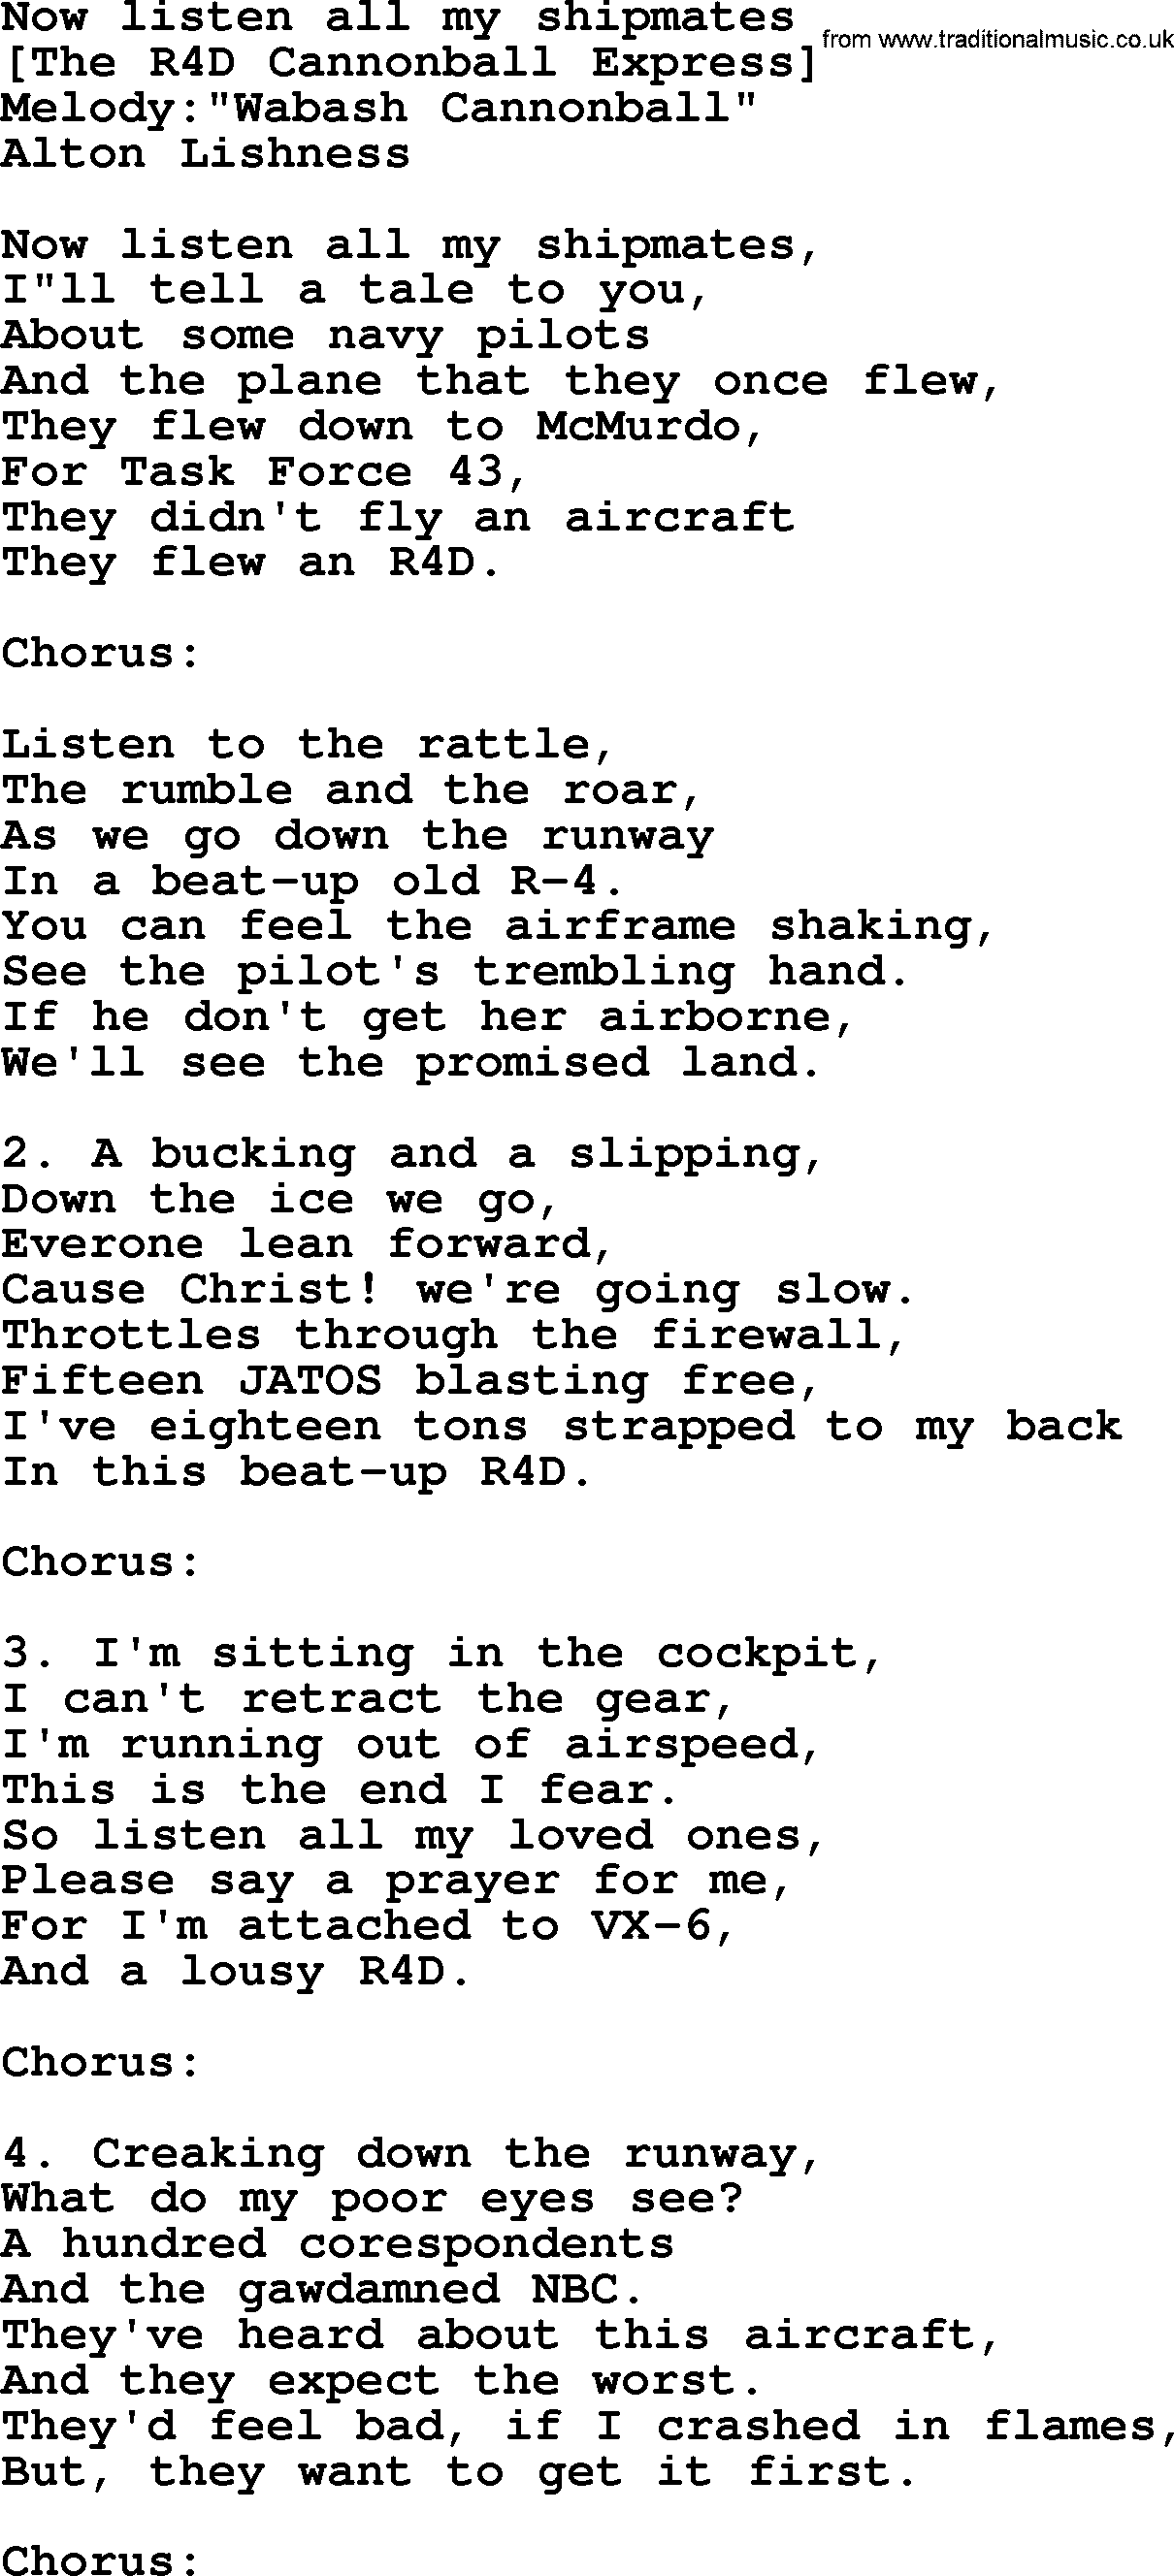 Old American Song: Now Listen All My Shipmates, lyrics